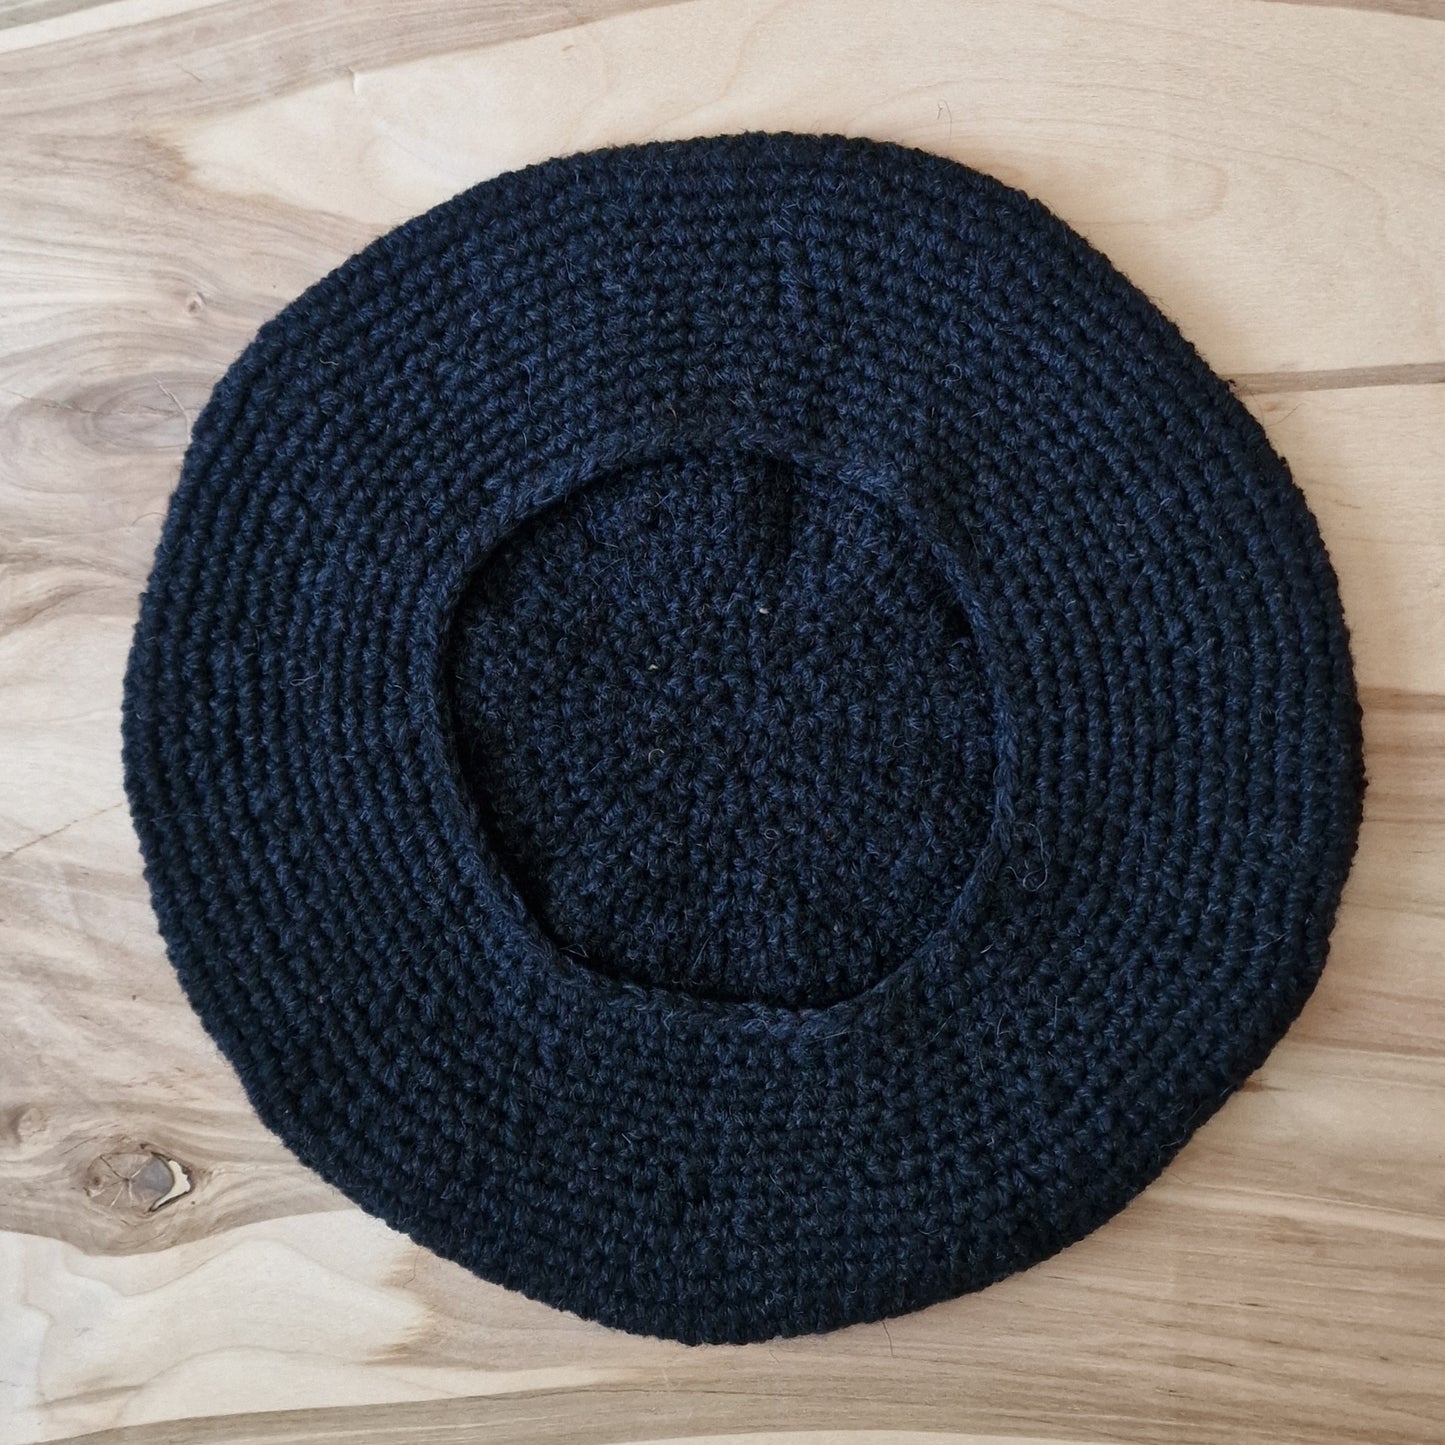 Black crochet beret (DZTO 9)